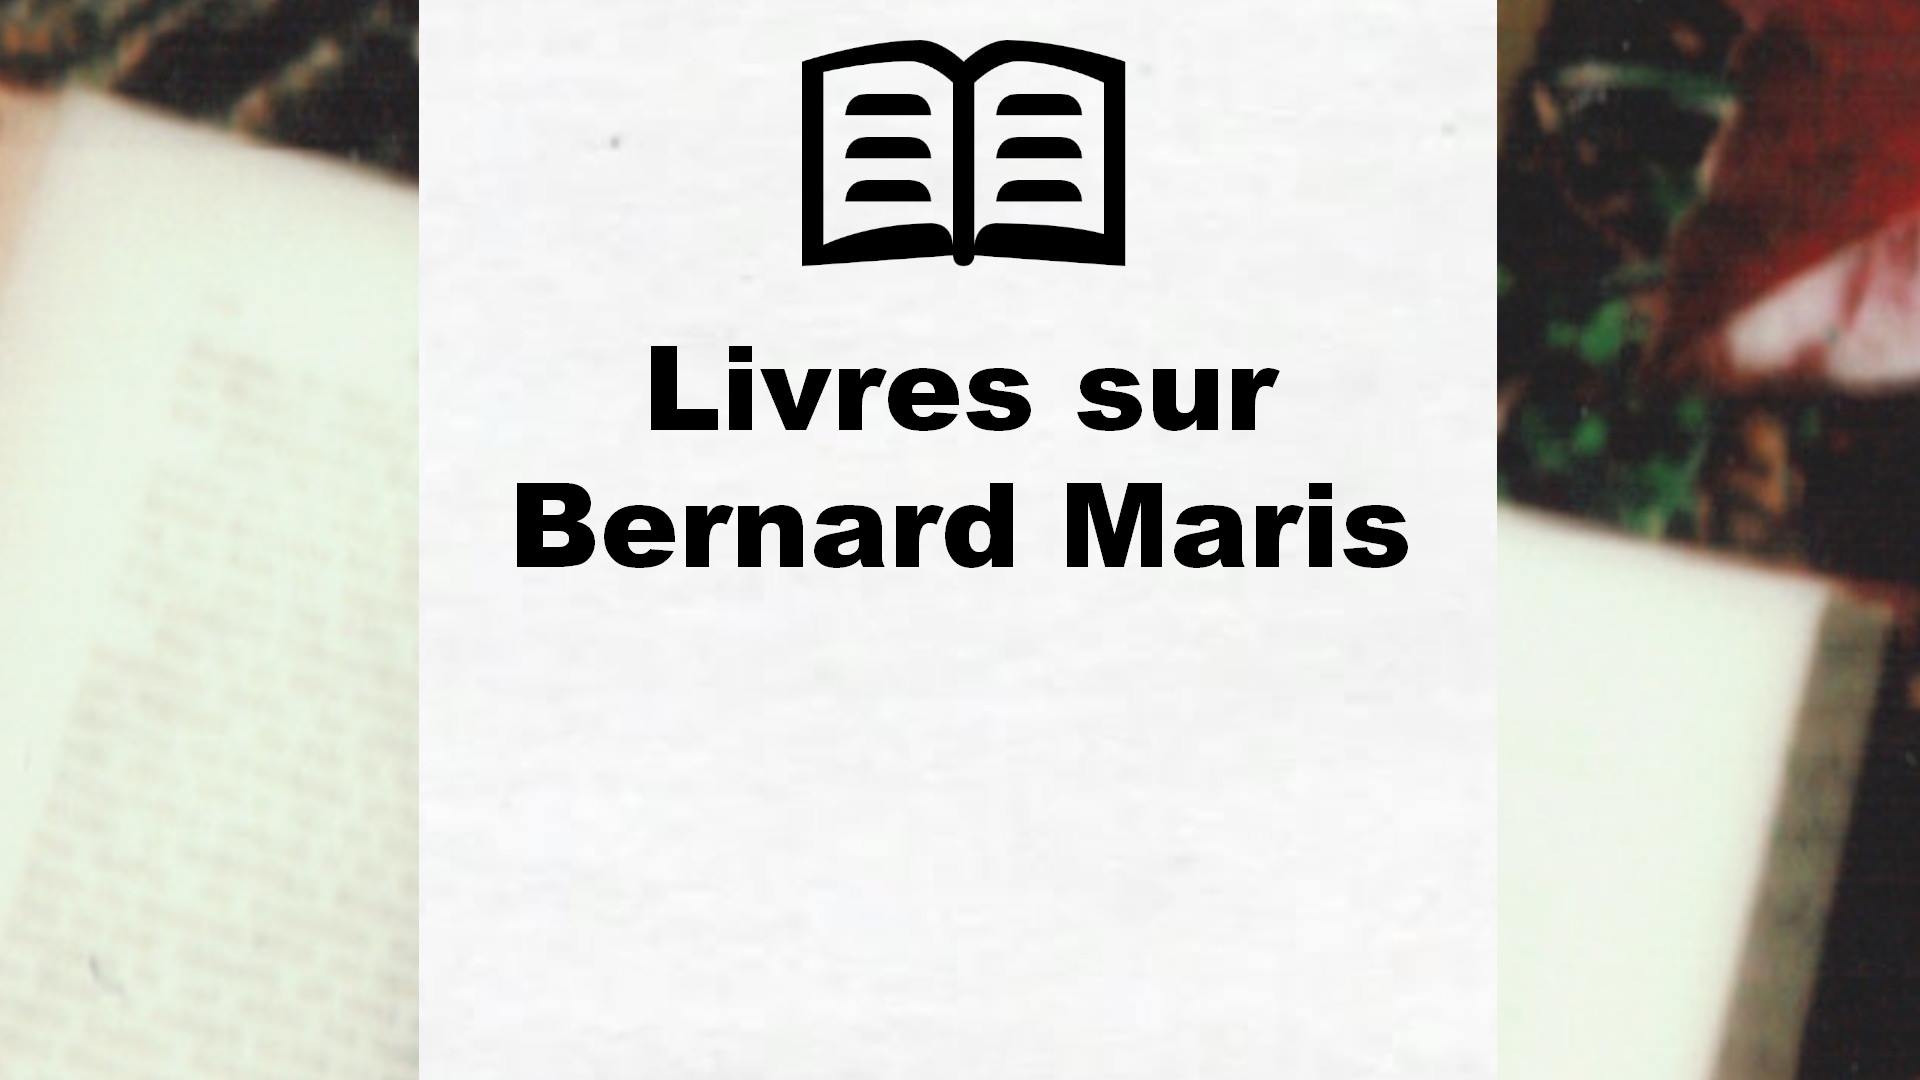 Livres sur Bernard Maris